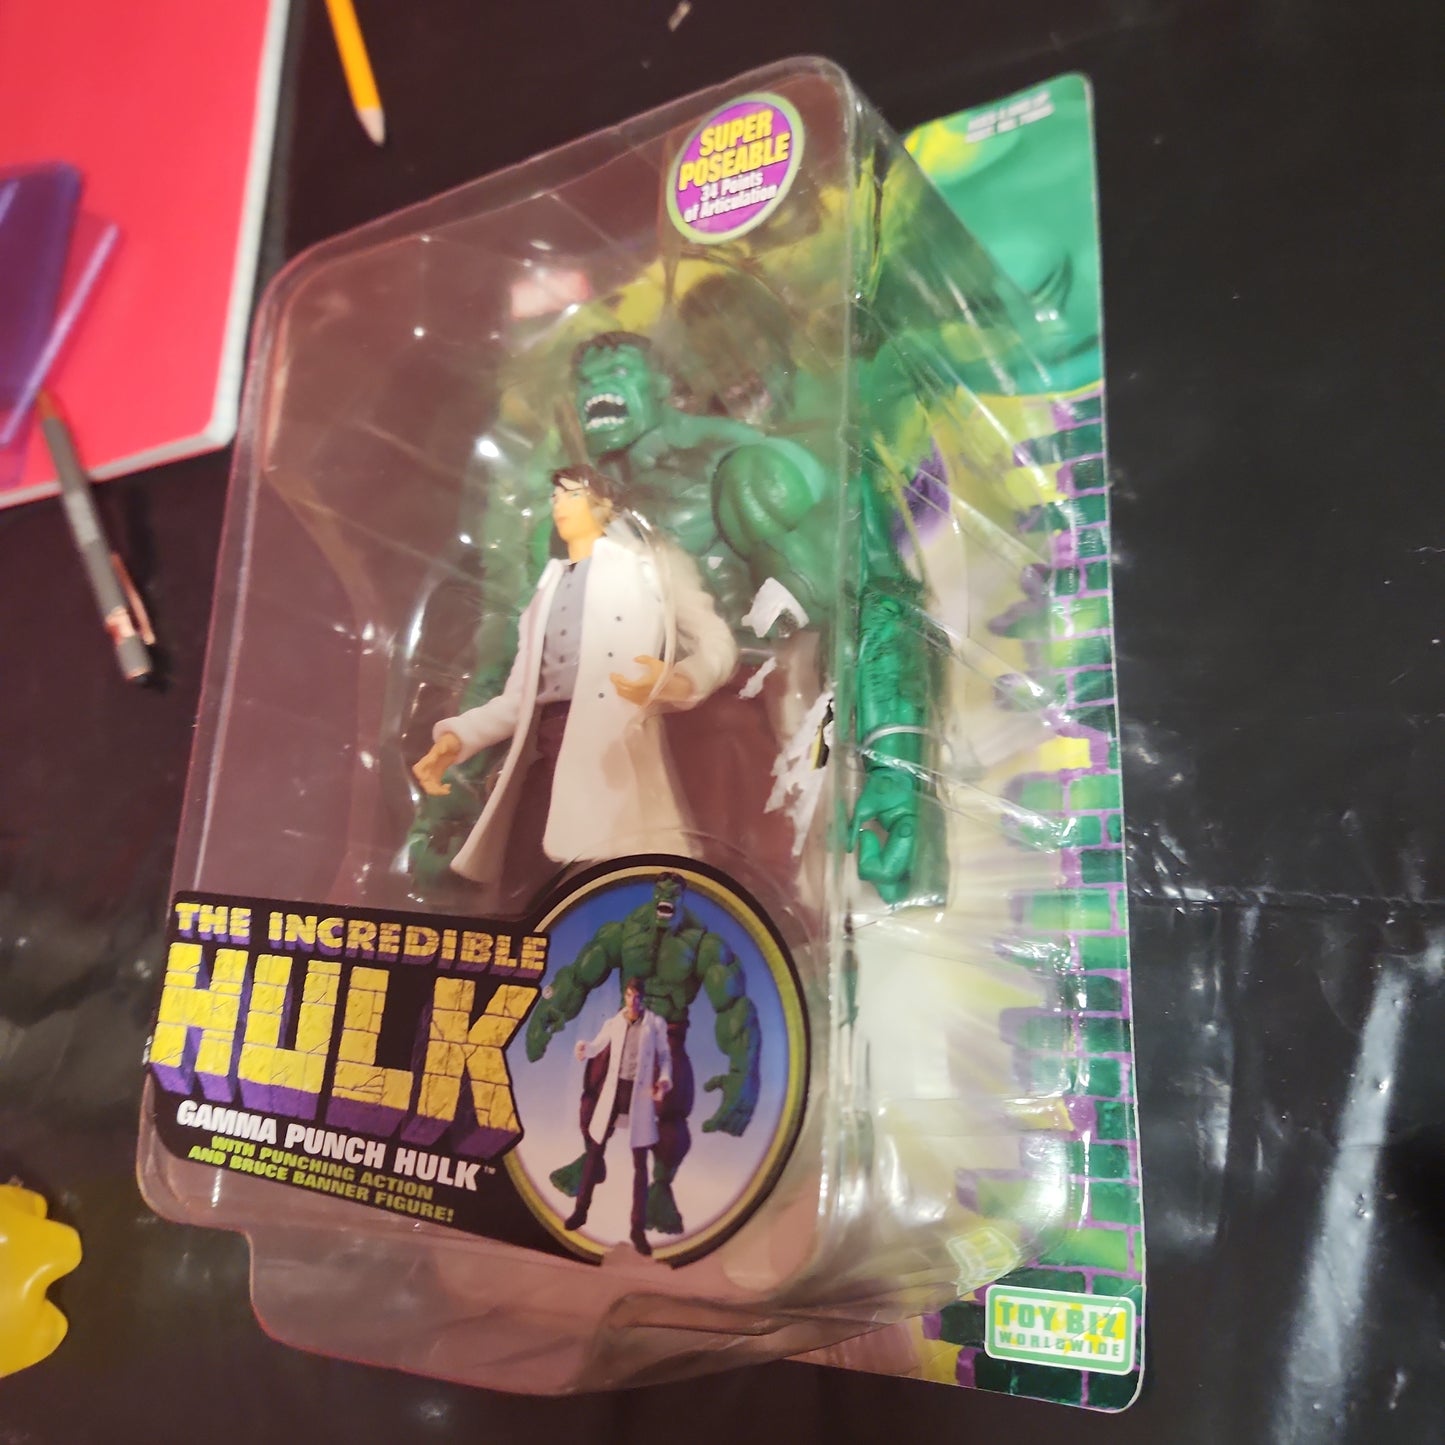 The Incredible HULK Gamma Punch HULK w/Bruce Banner Figure ToyBiz NICE !!